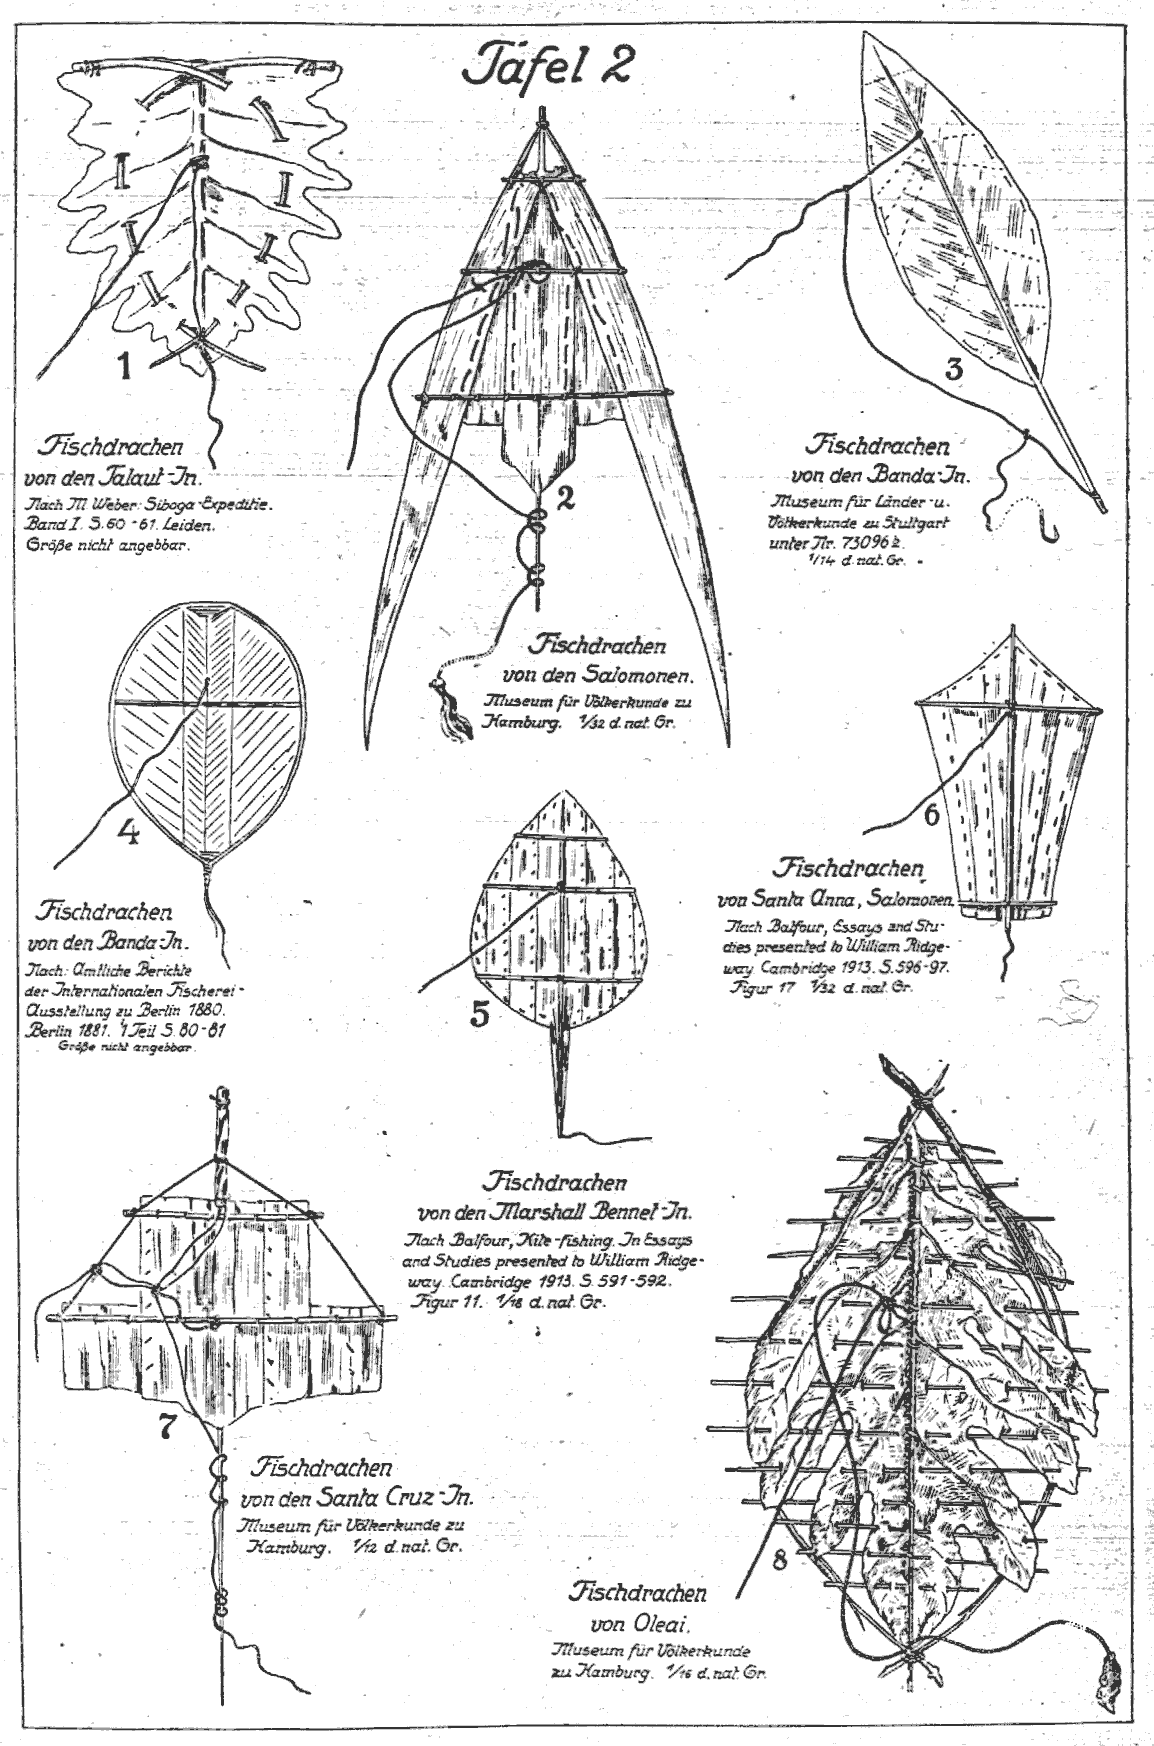 Paul's Fishing Kites - Kite Instructions